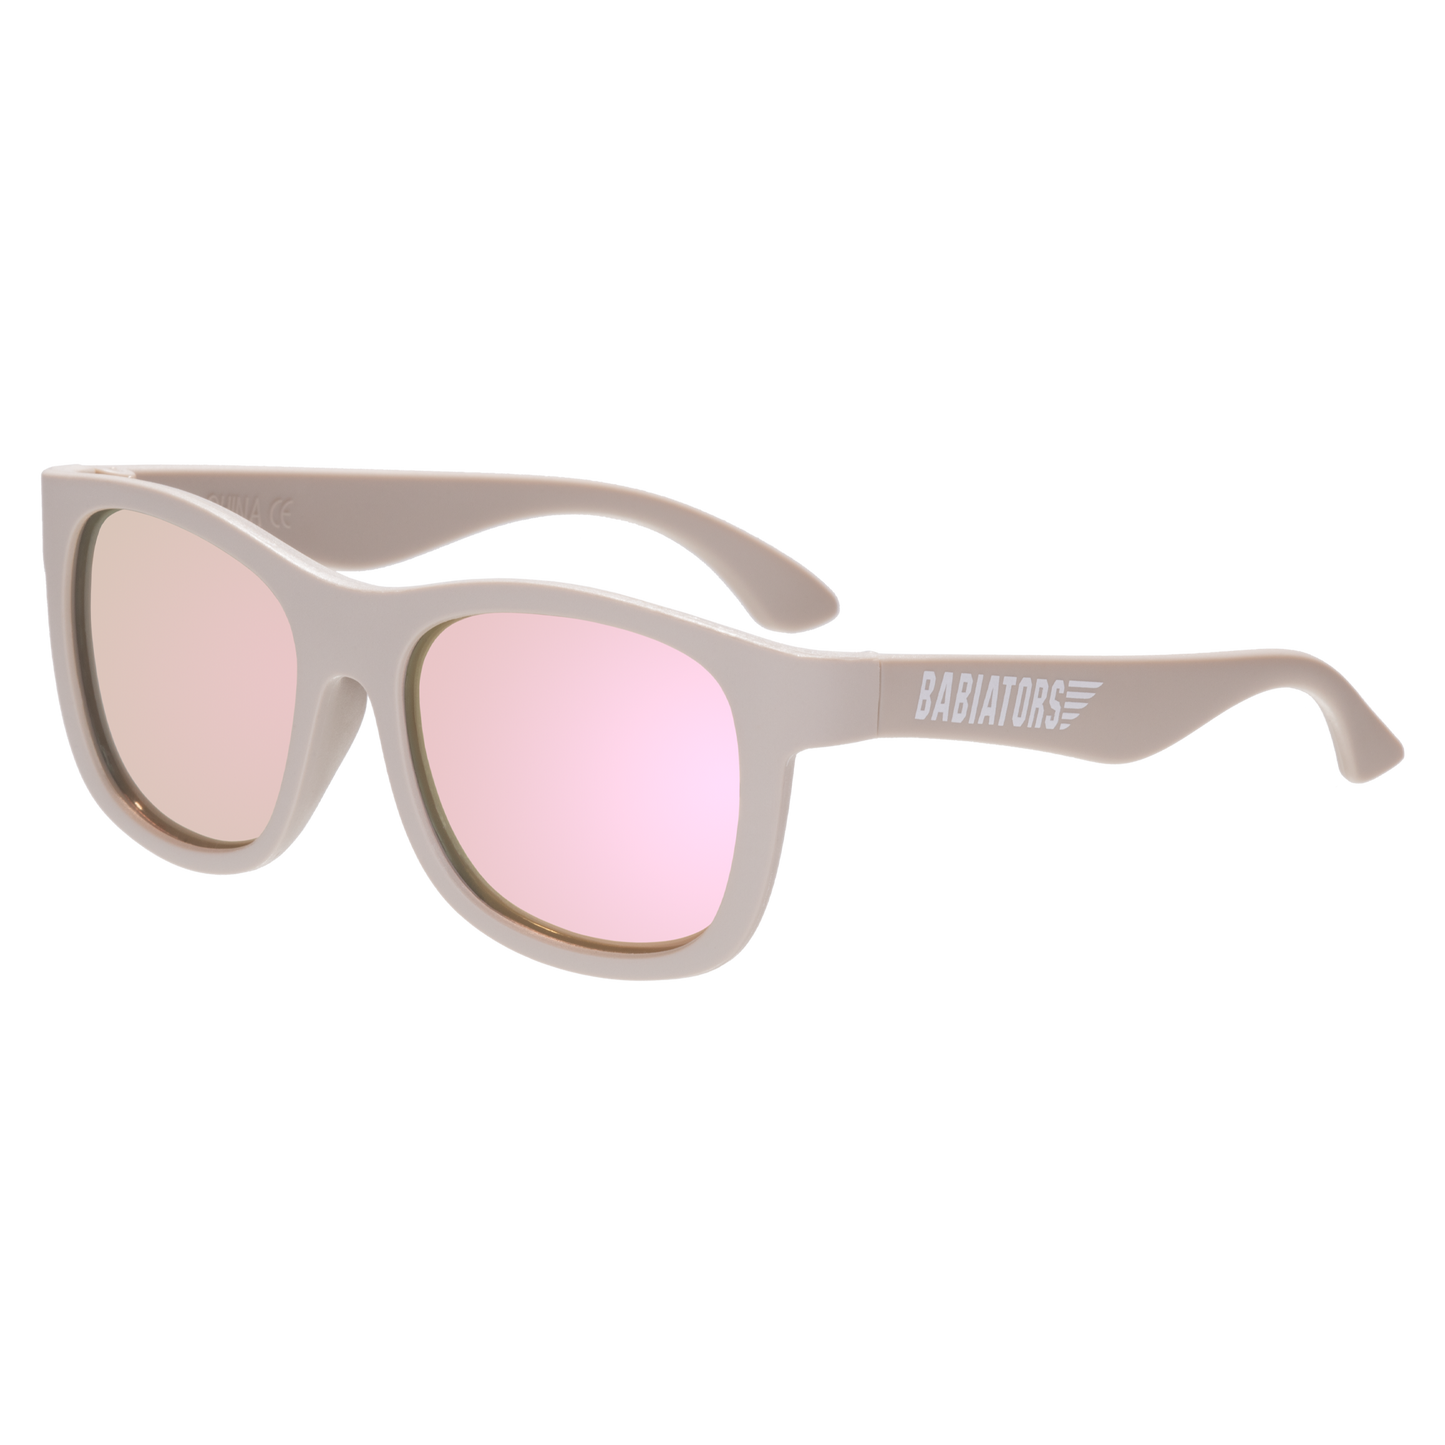 Blue Series Navigator polarized Sunglasses "The Hipster"